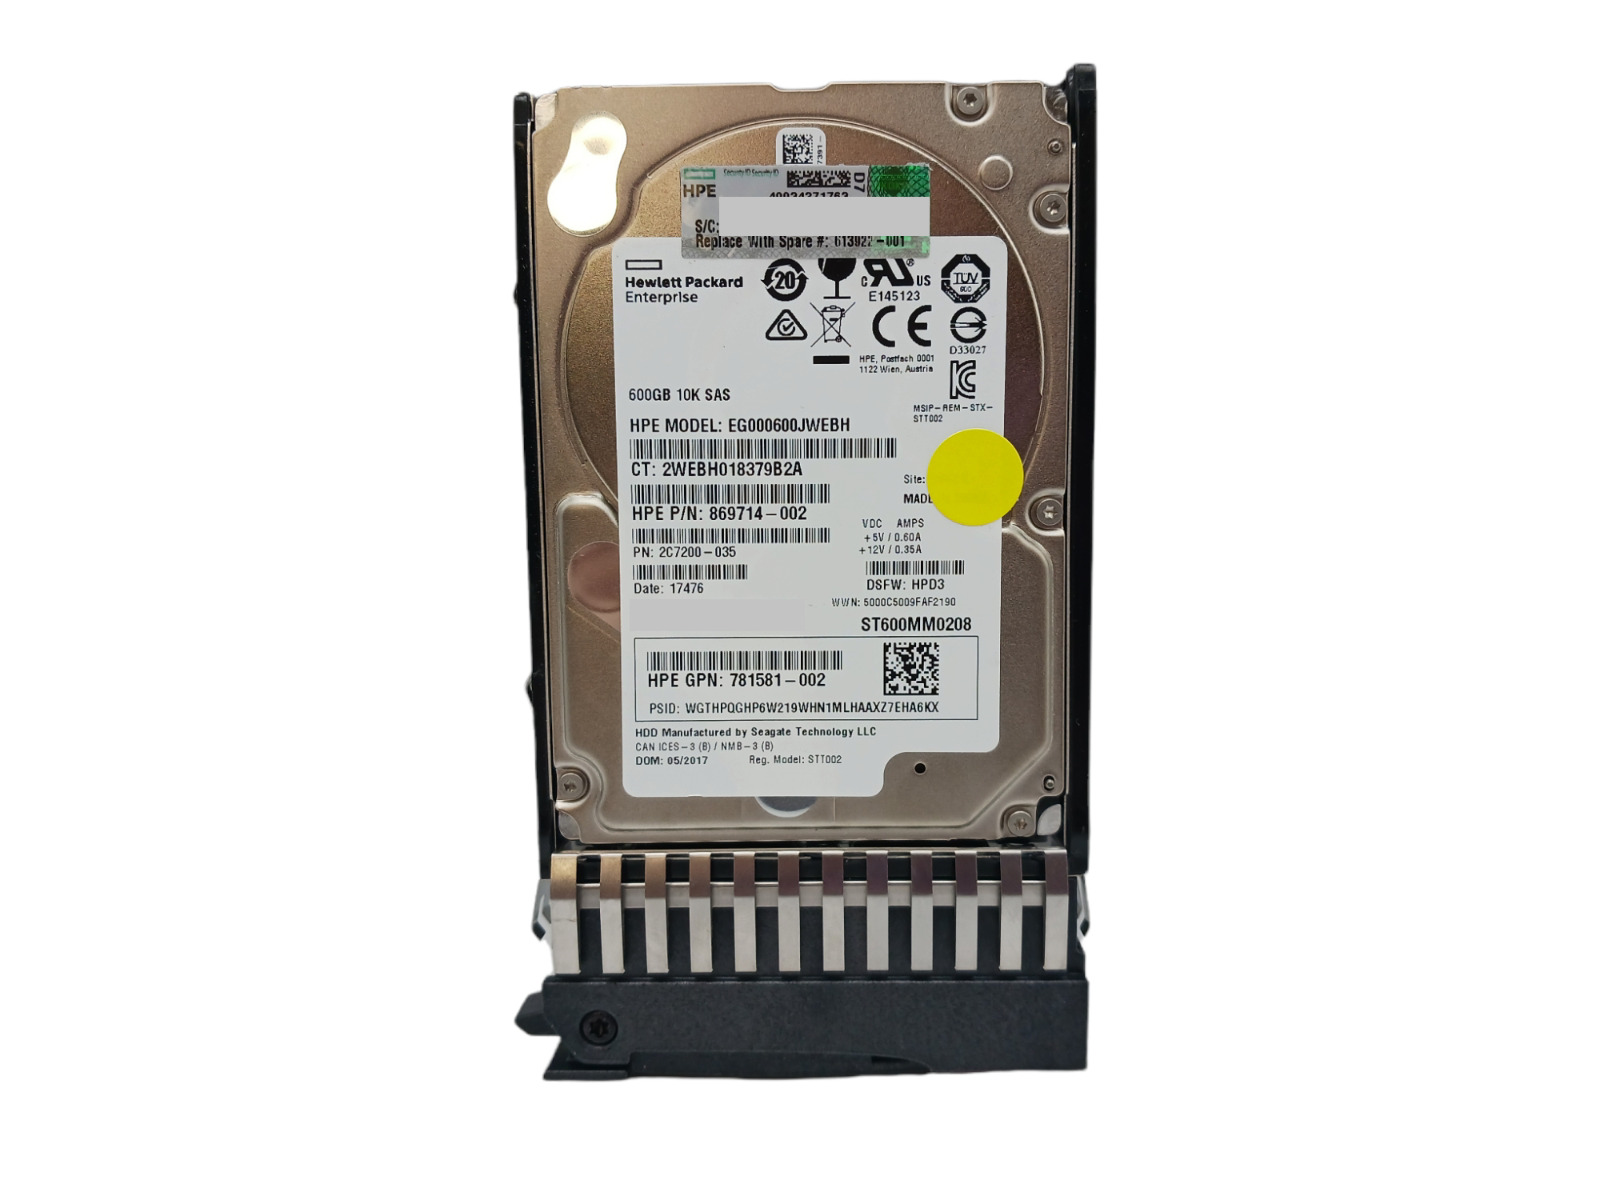 Hewlett Packard 600GB SAS Enterprise 10K (2.5in) Hard Disk Drives - TESTED